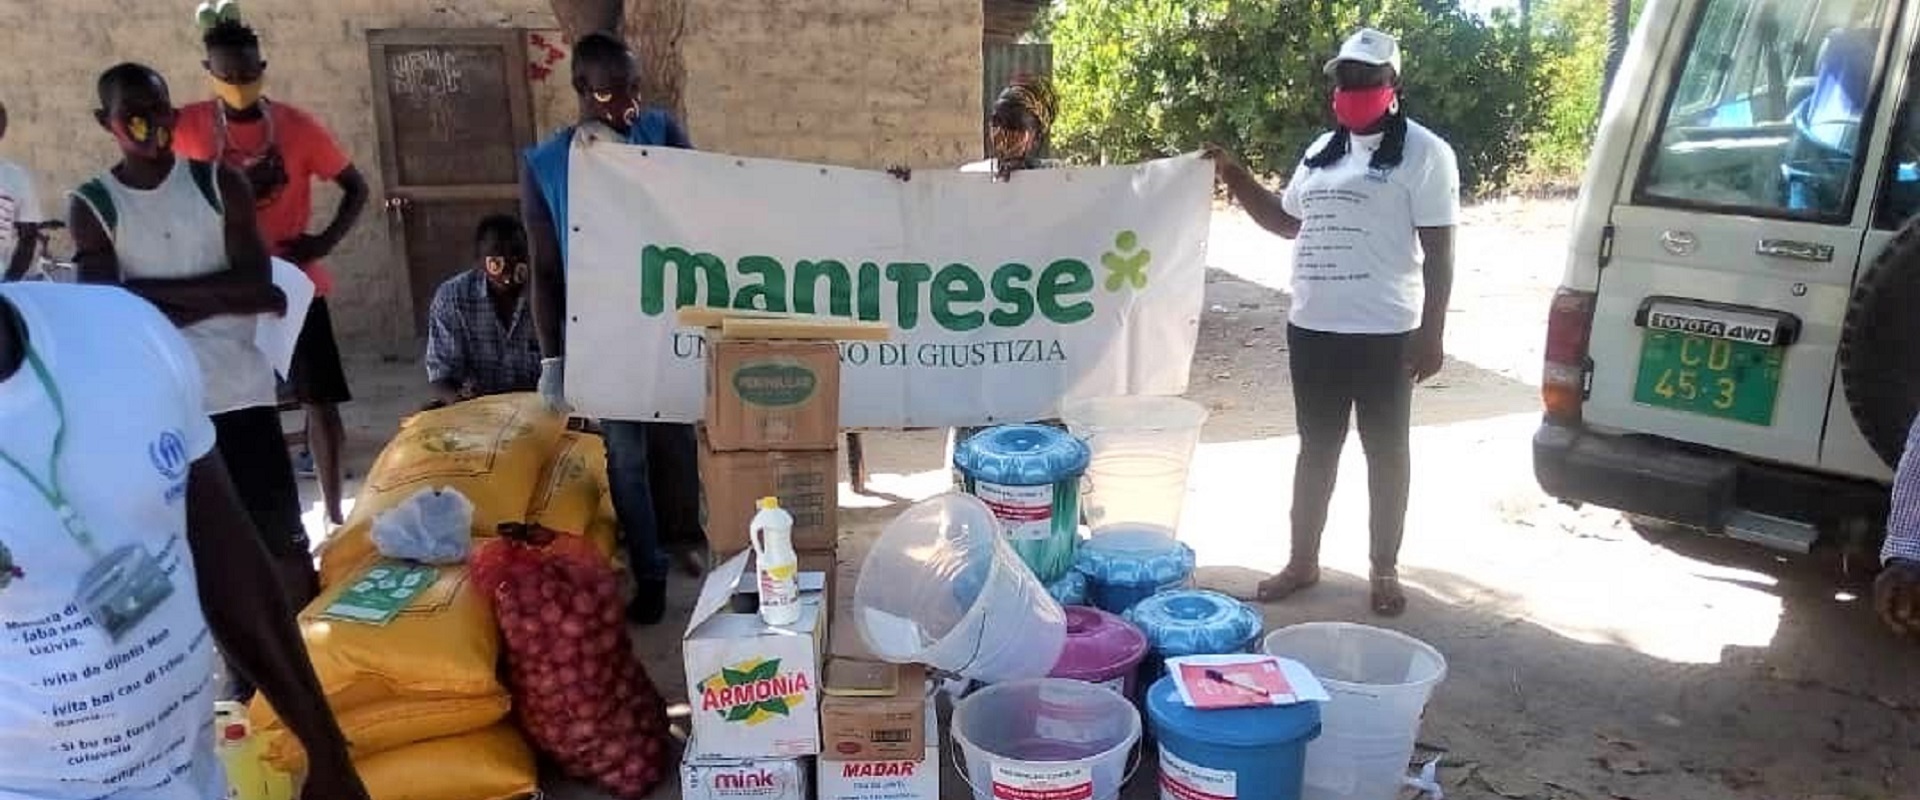 guinea bissau emergenza sanitaria emergenza alimentare mani tese 2020